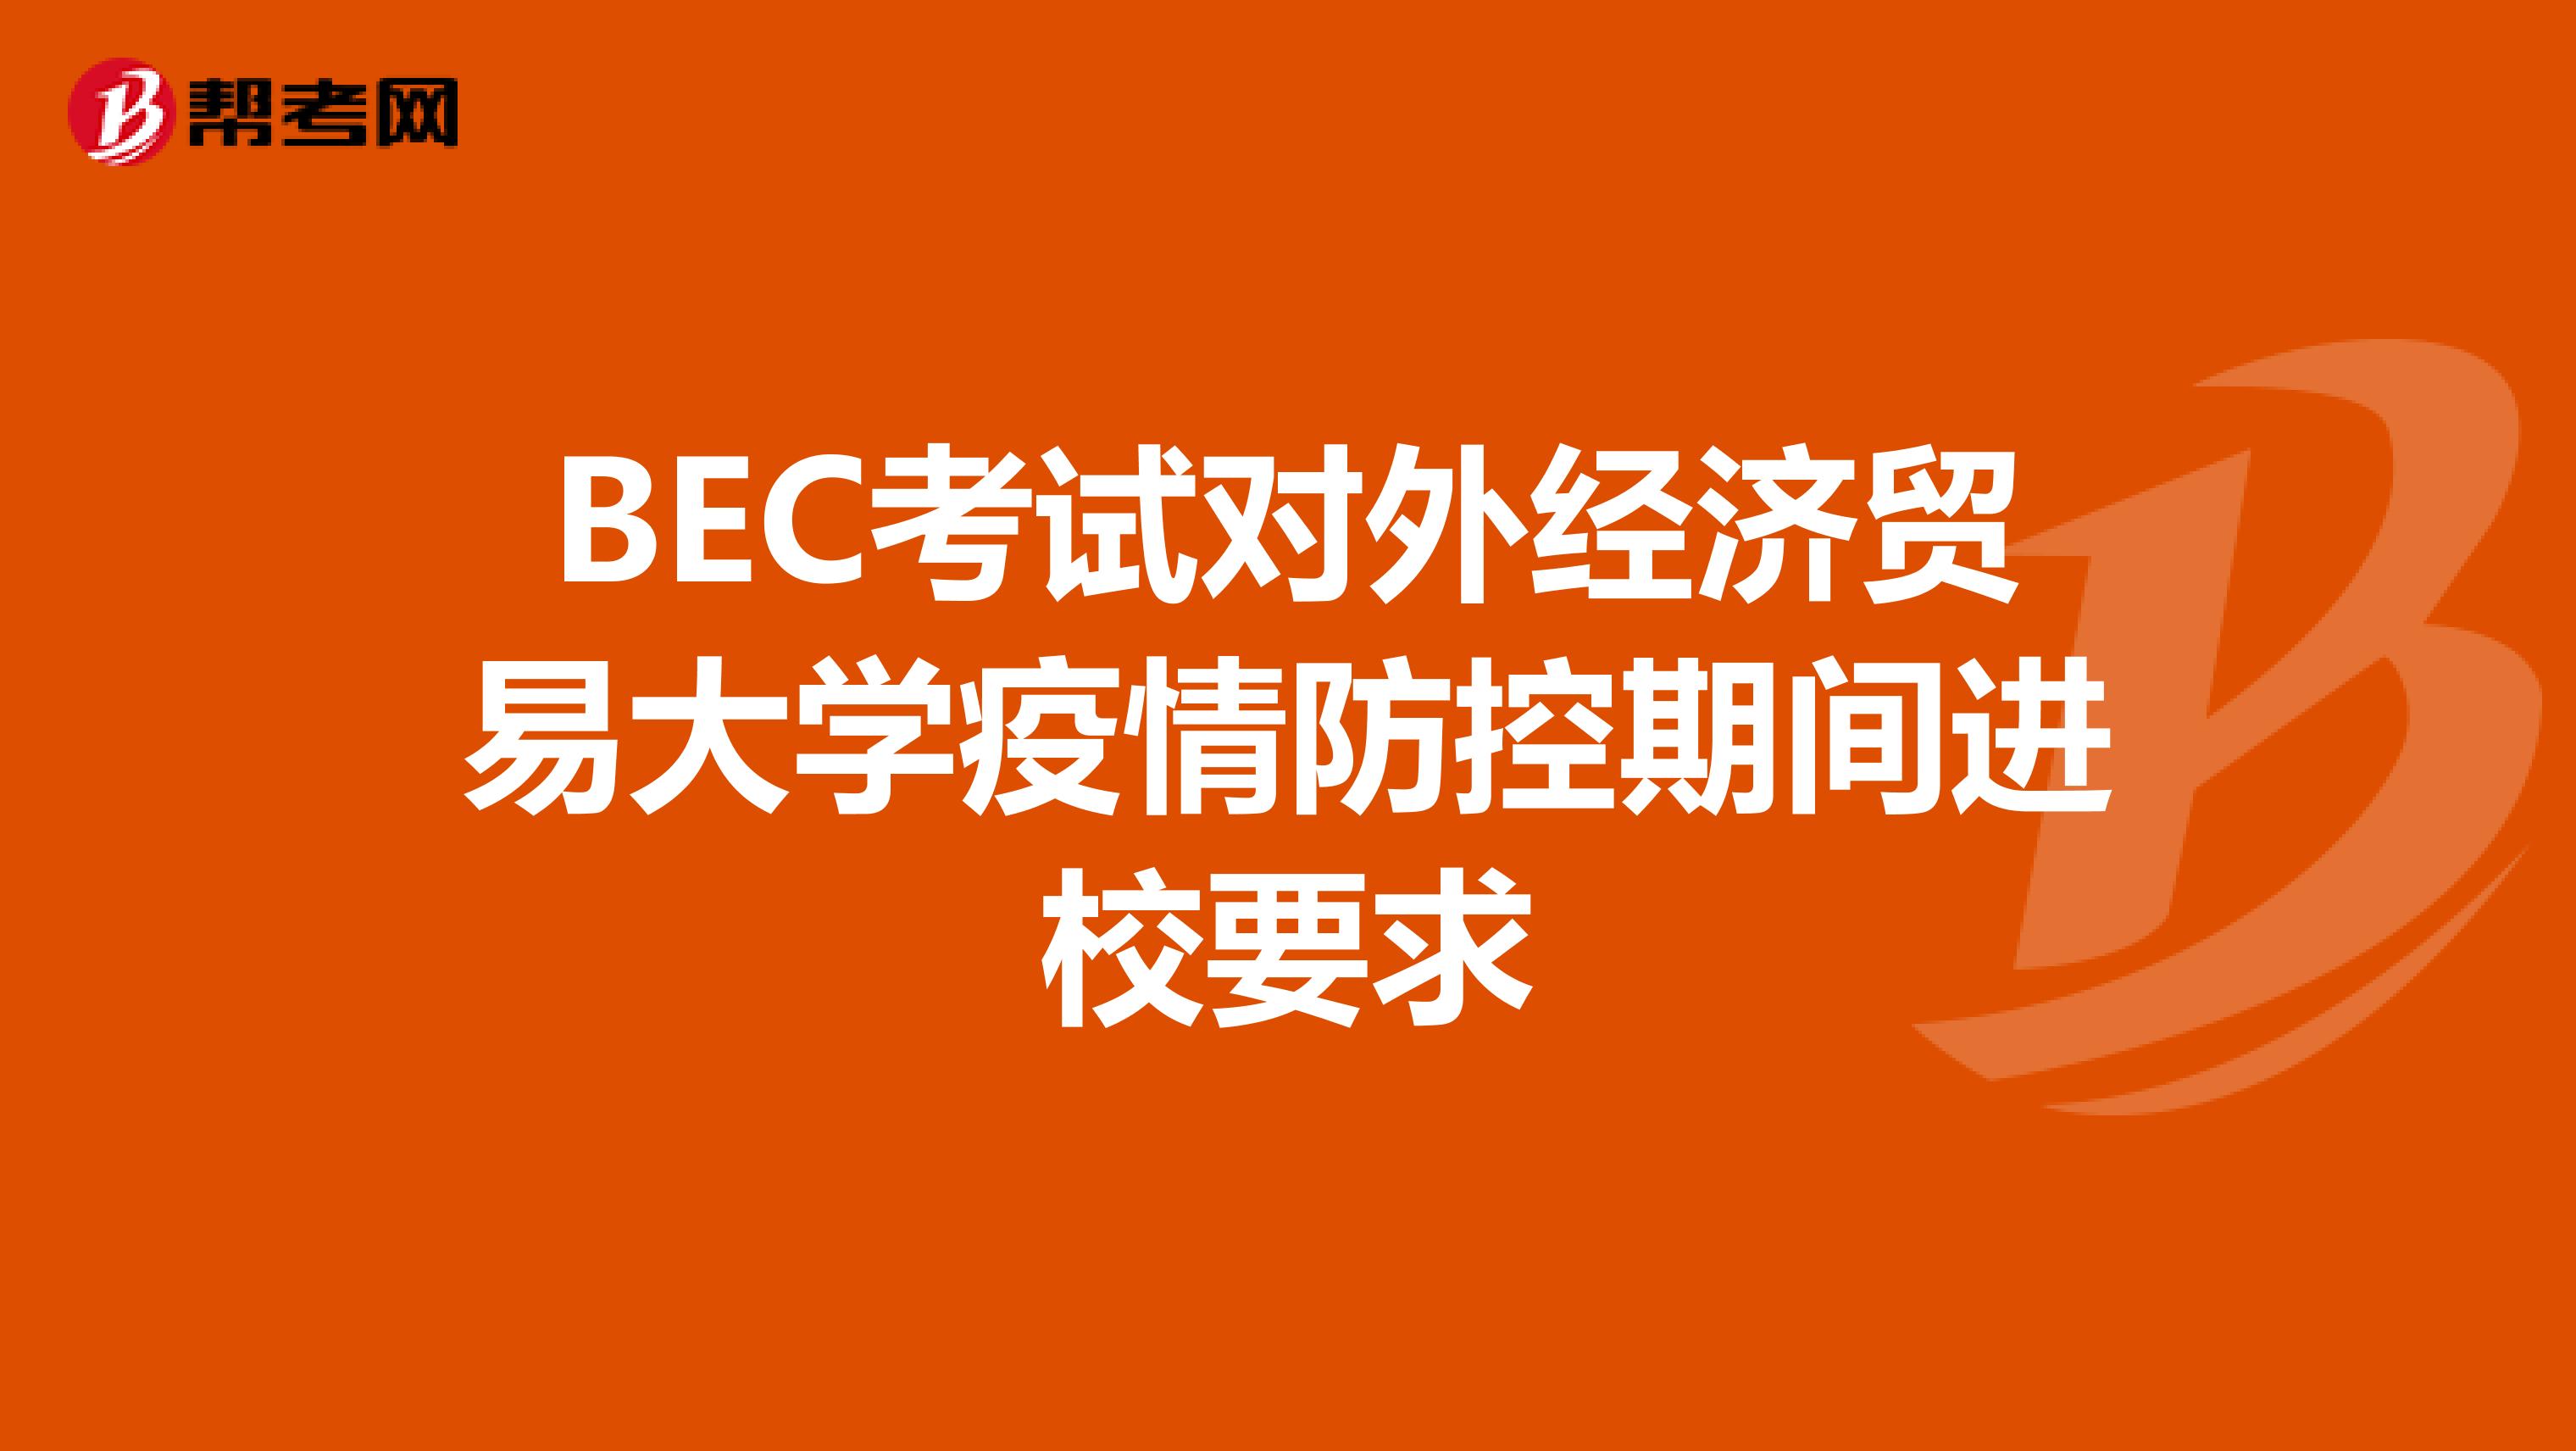 BEC考试对外经济贸易大学疫情防控期间进校要求